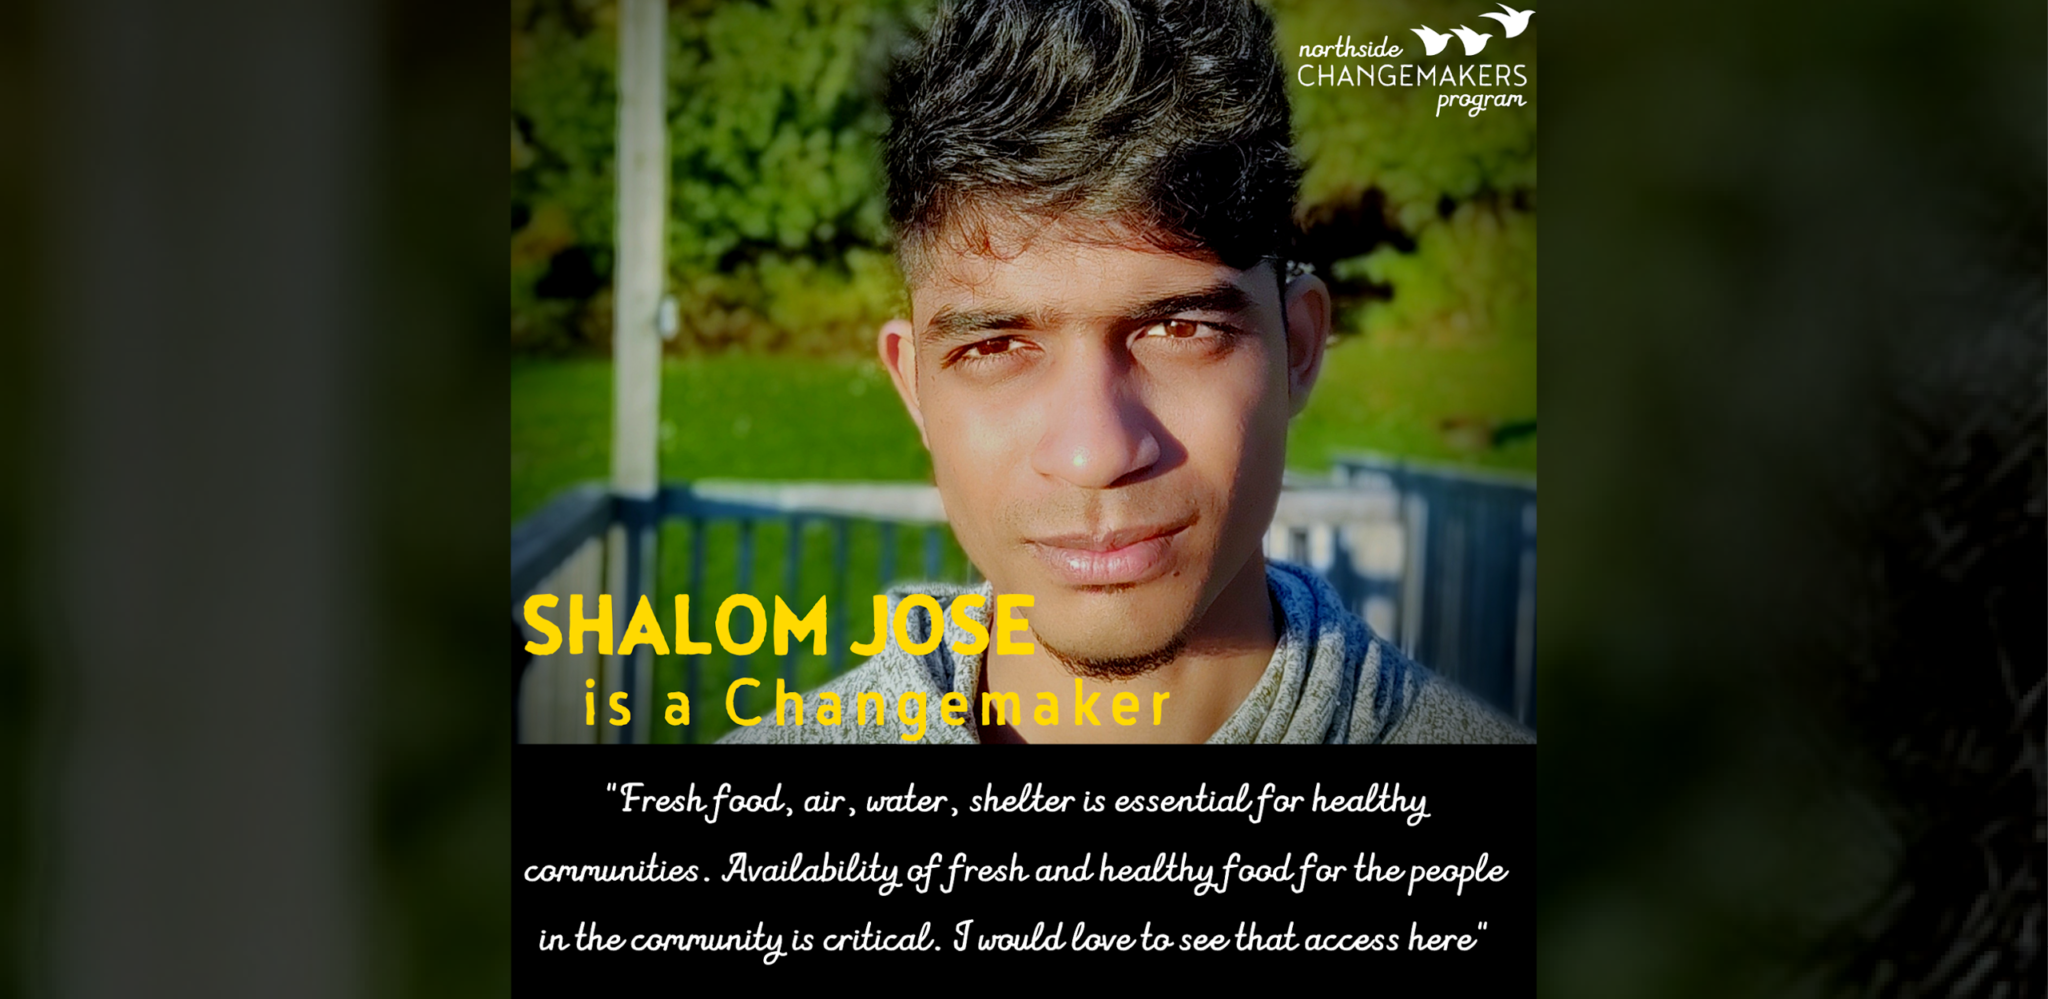 Shalom Jose is a changemaker